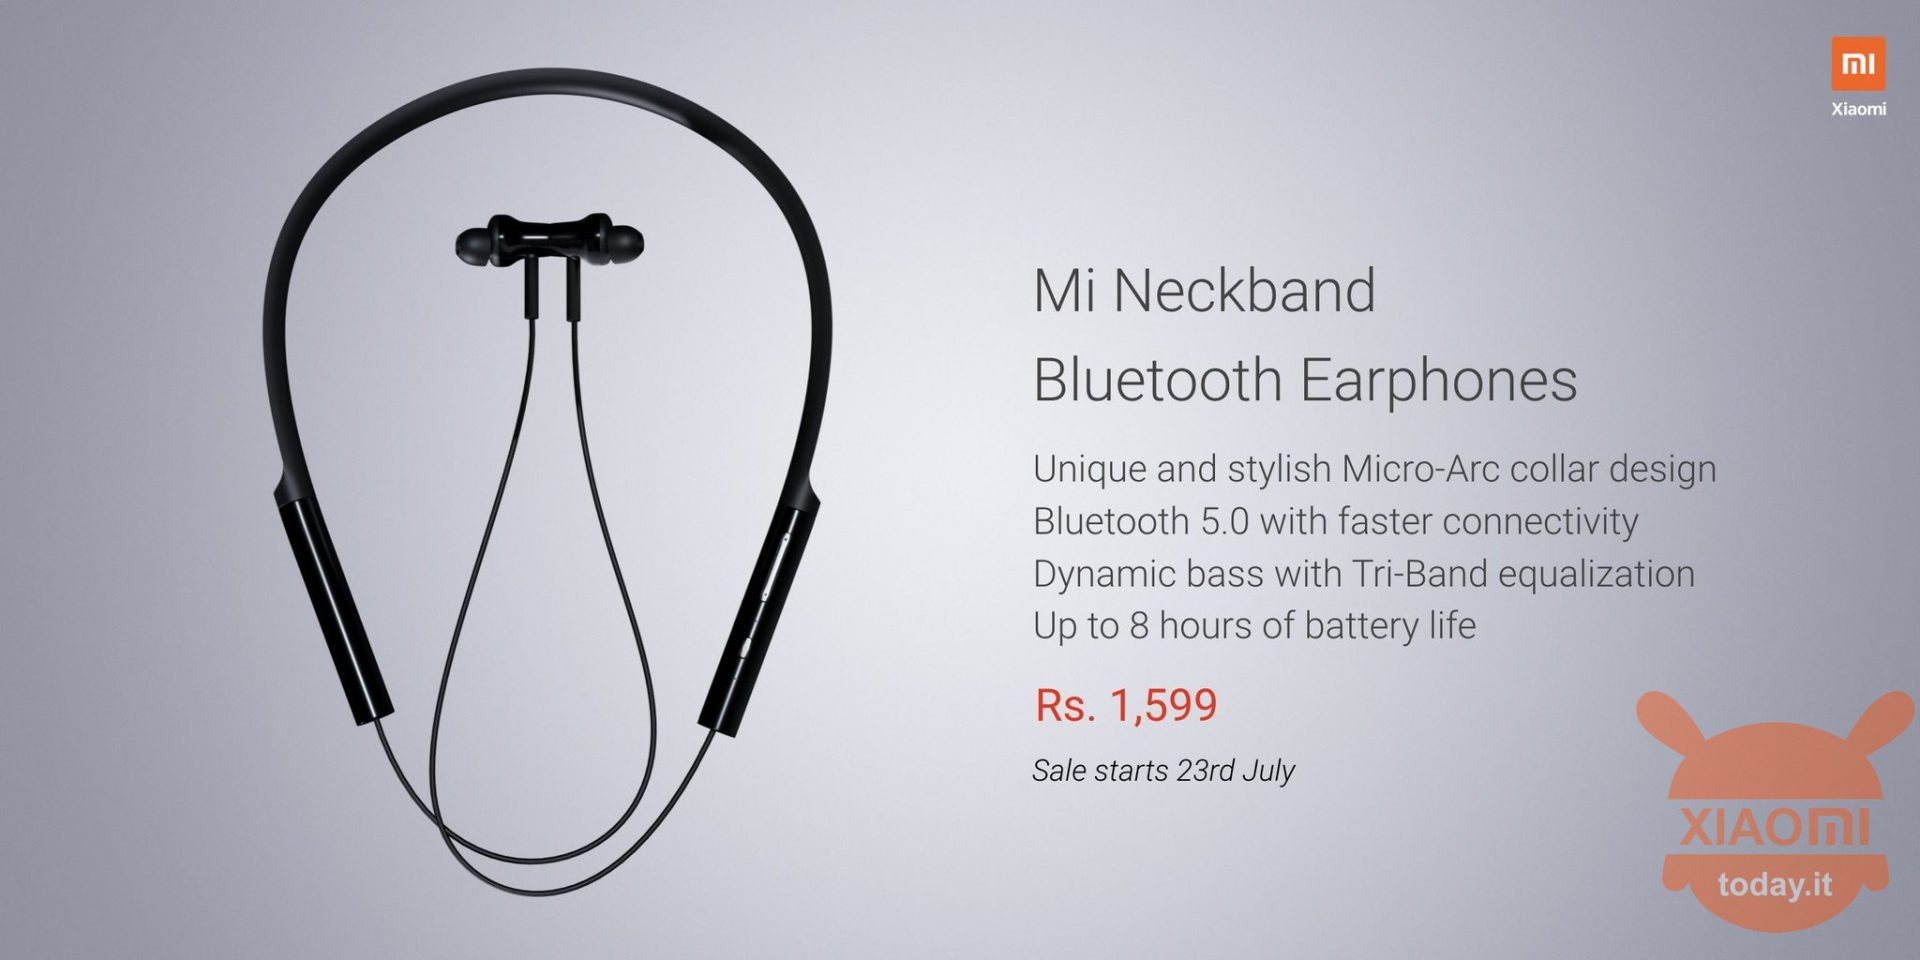 Xiaomi Mi Neckband Bluetooth Earphones